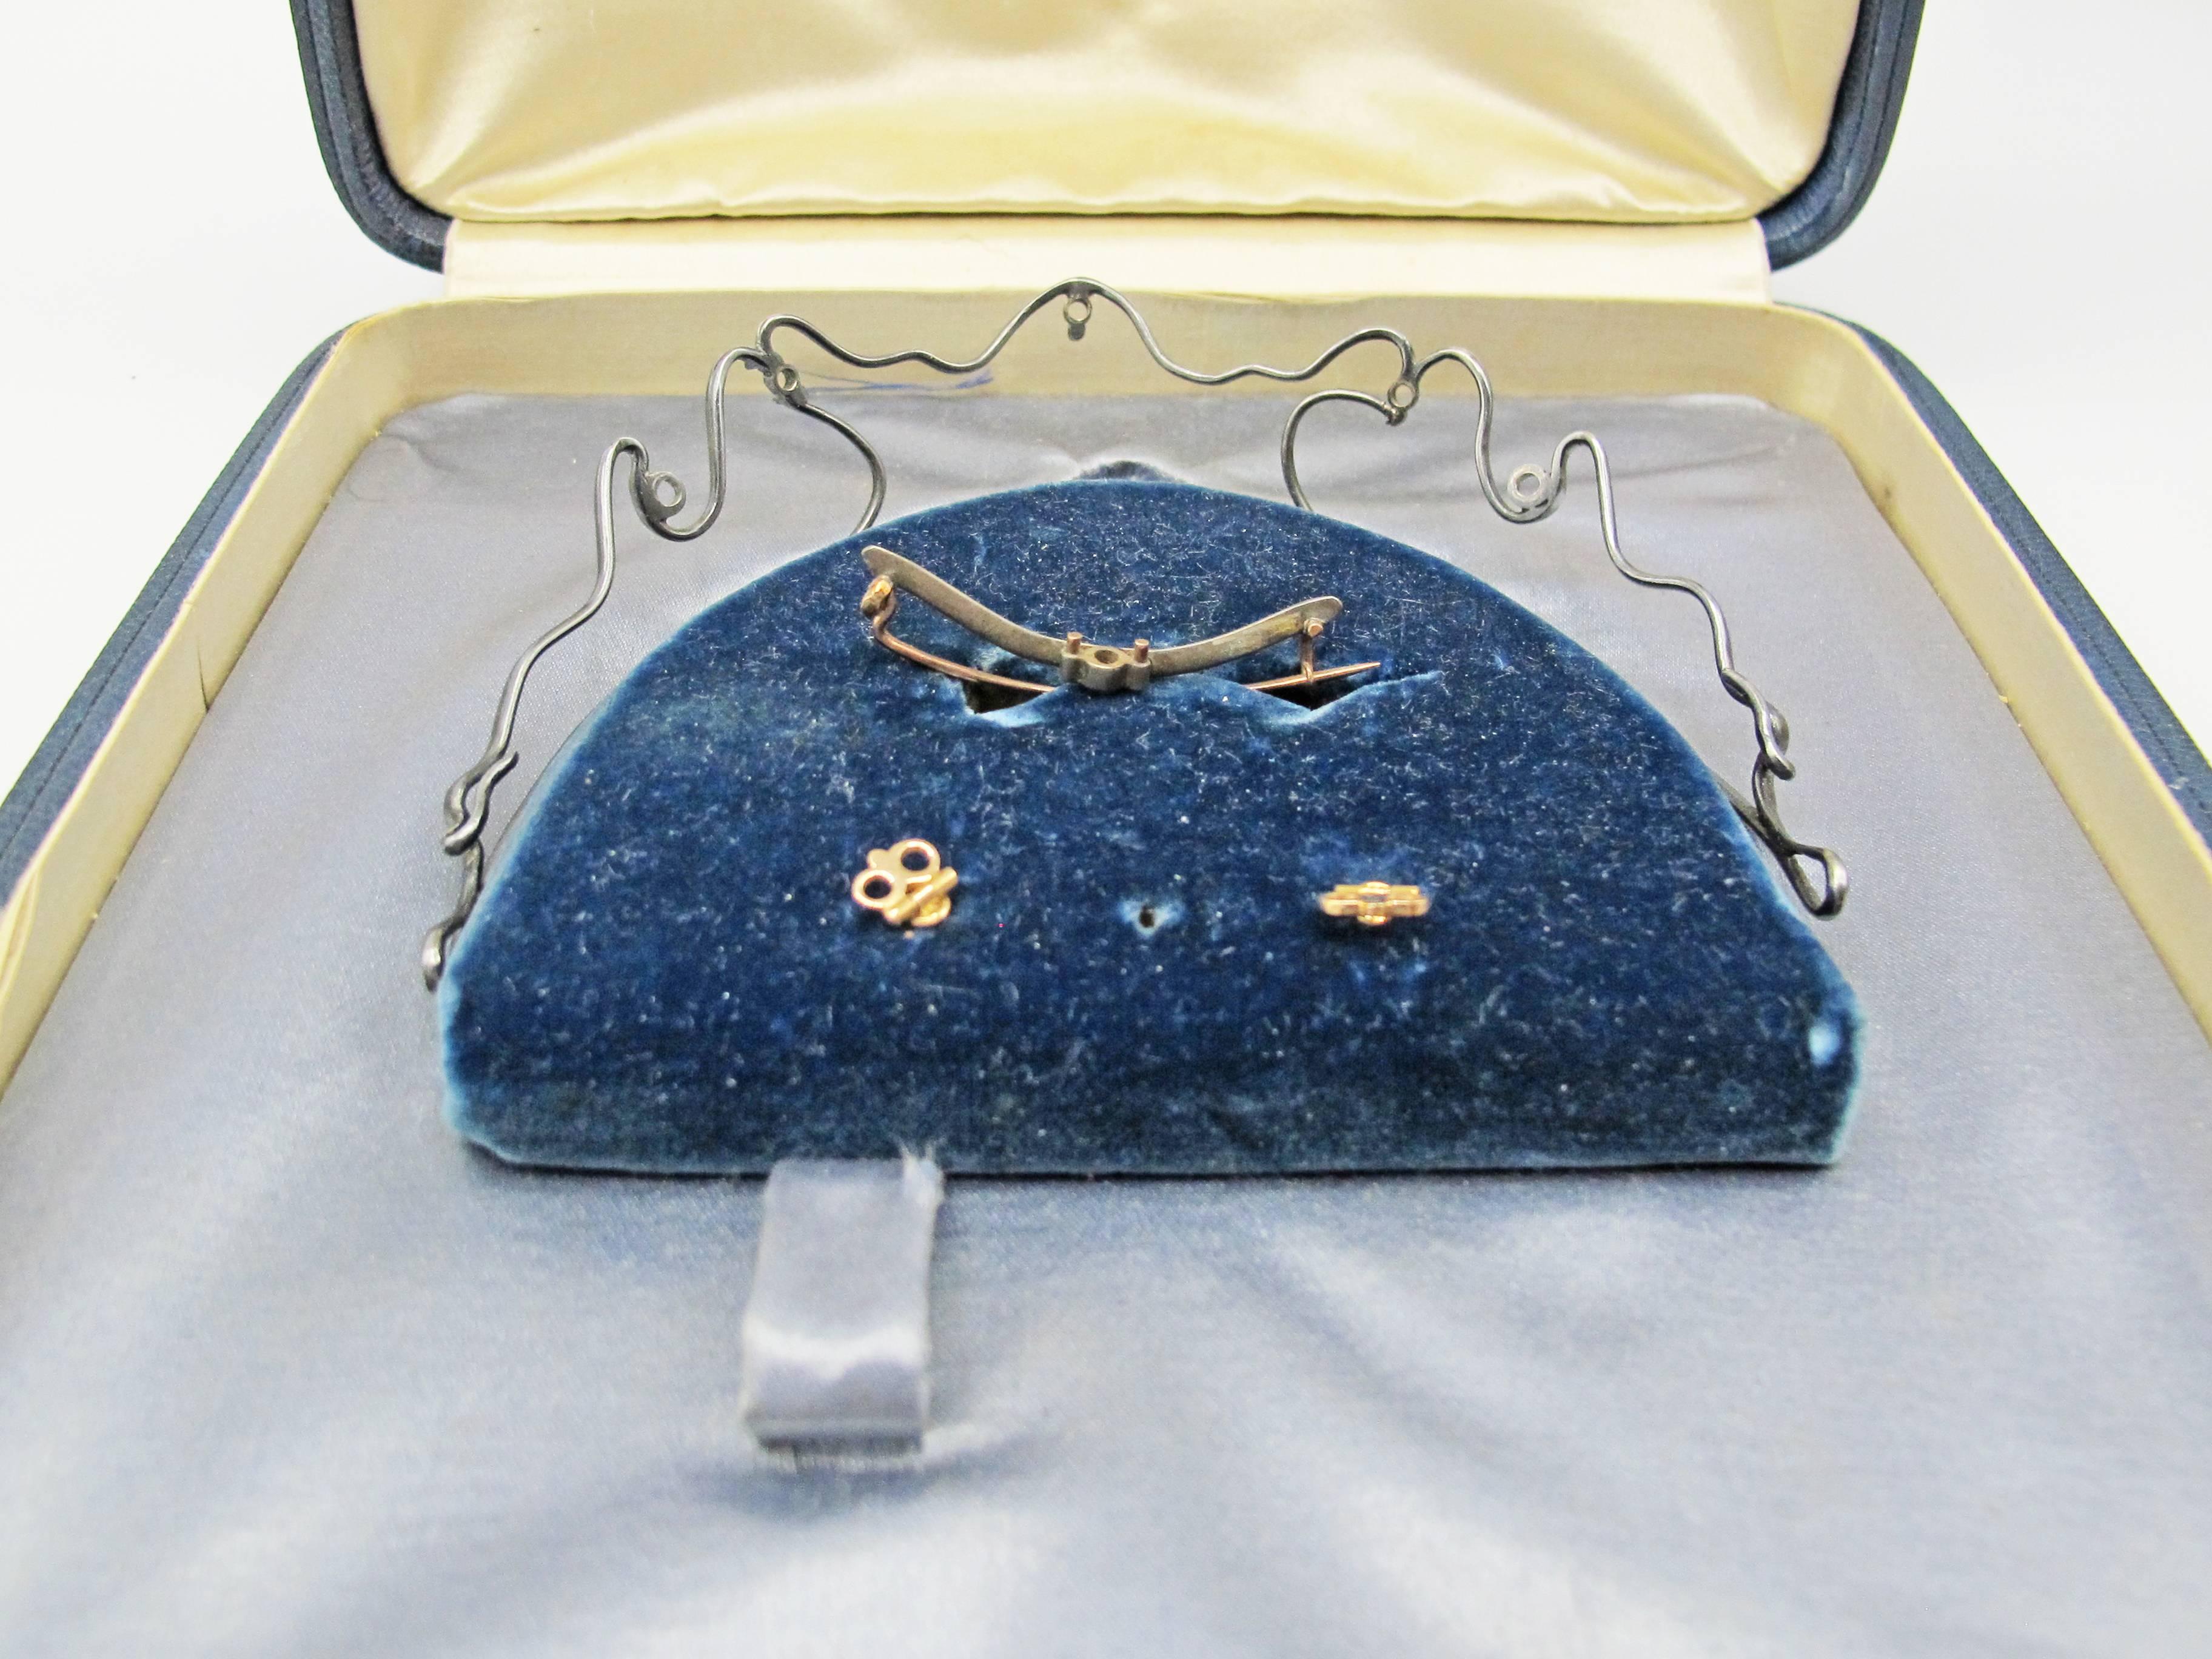 Rococo French Princely Family Collection Antique Diamond Tiara Convert Necklace Brooch